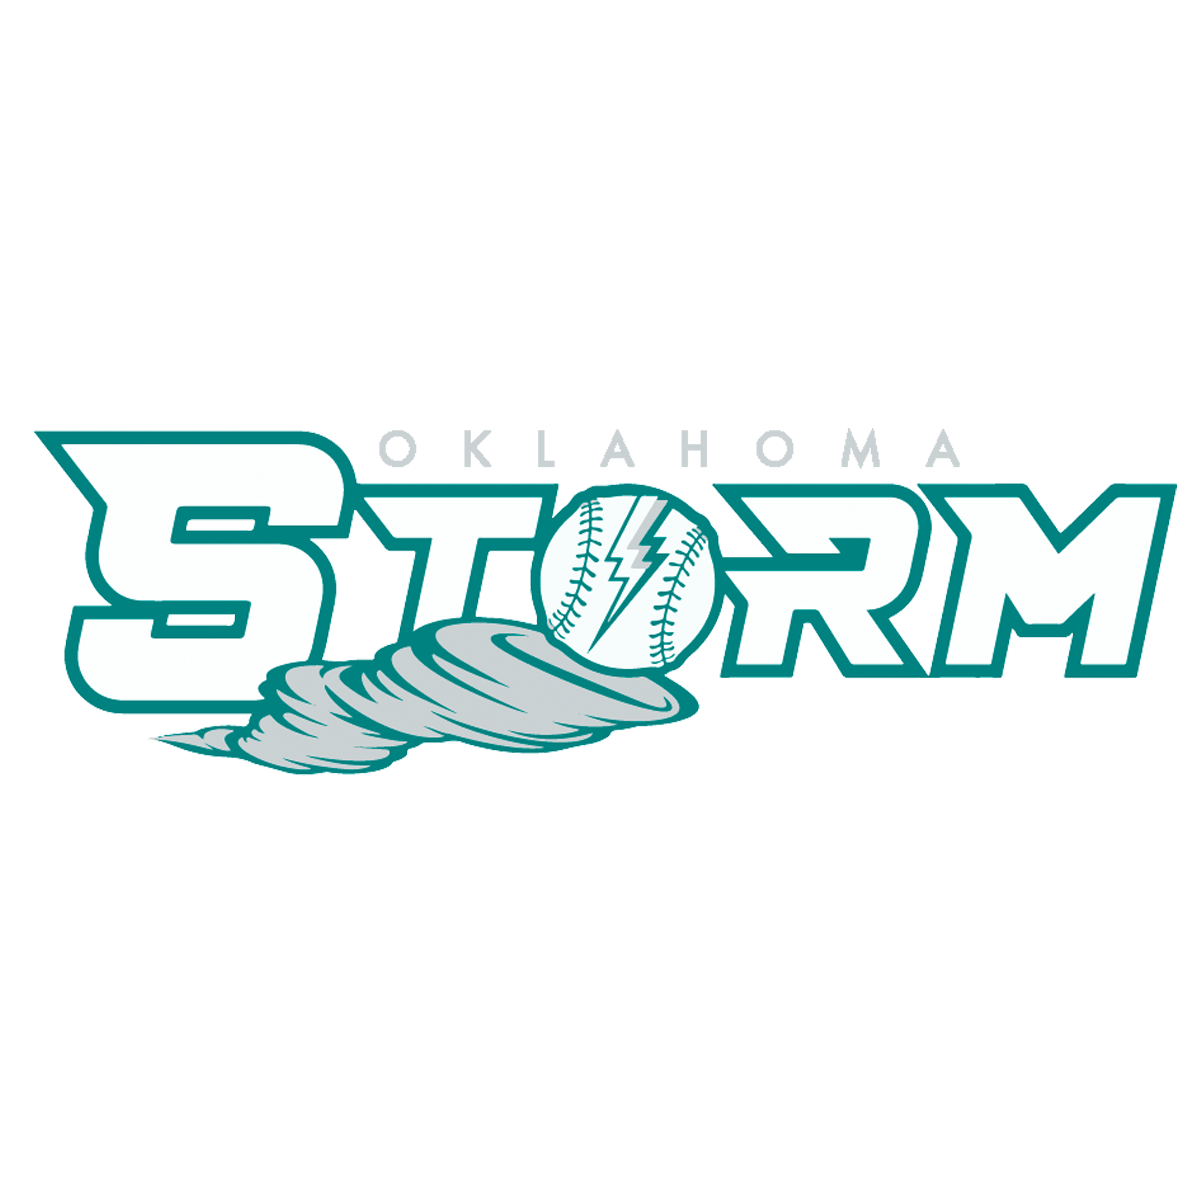 Oklahoma Storm Softball Team Store